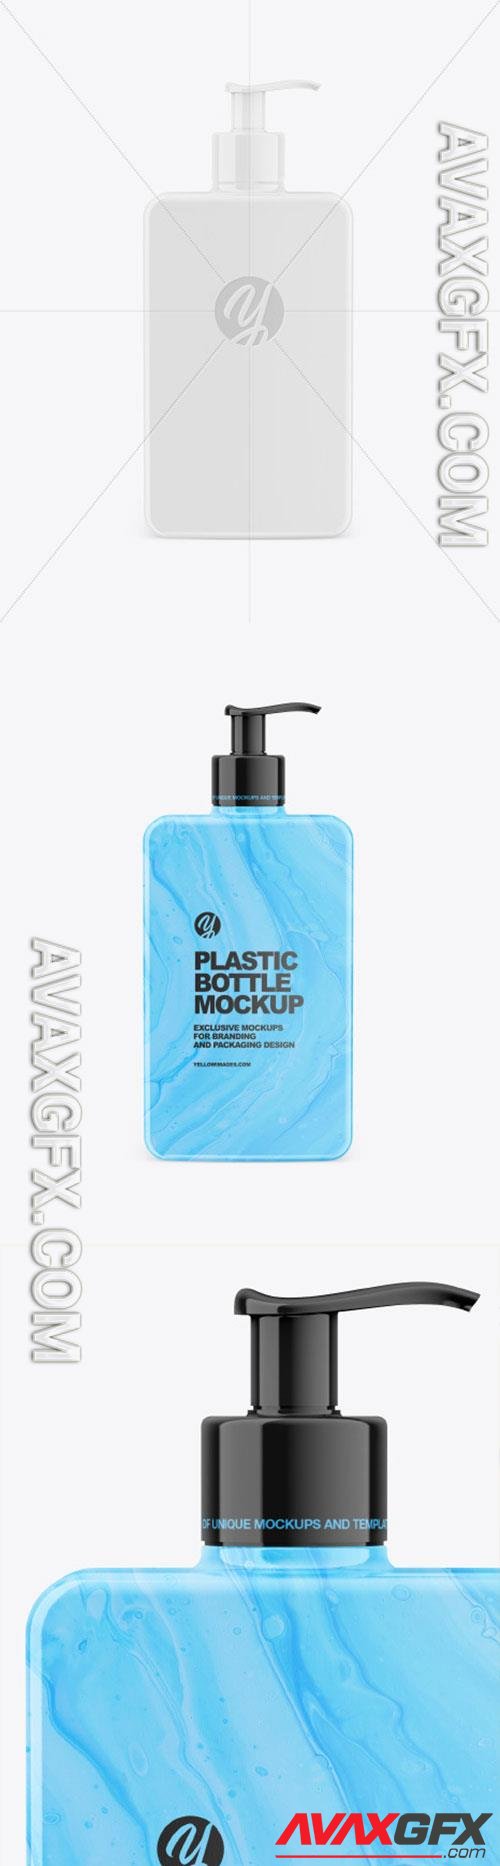 Plastic Square Bottle with Pump Mockup 86532 TIF